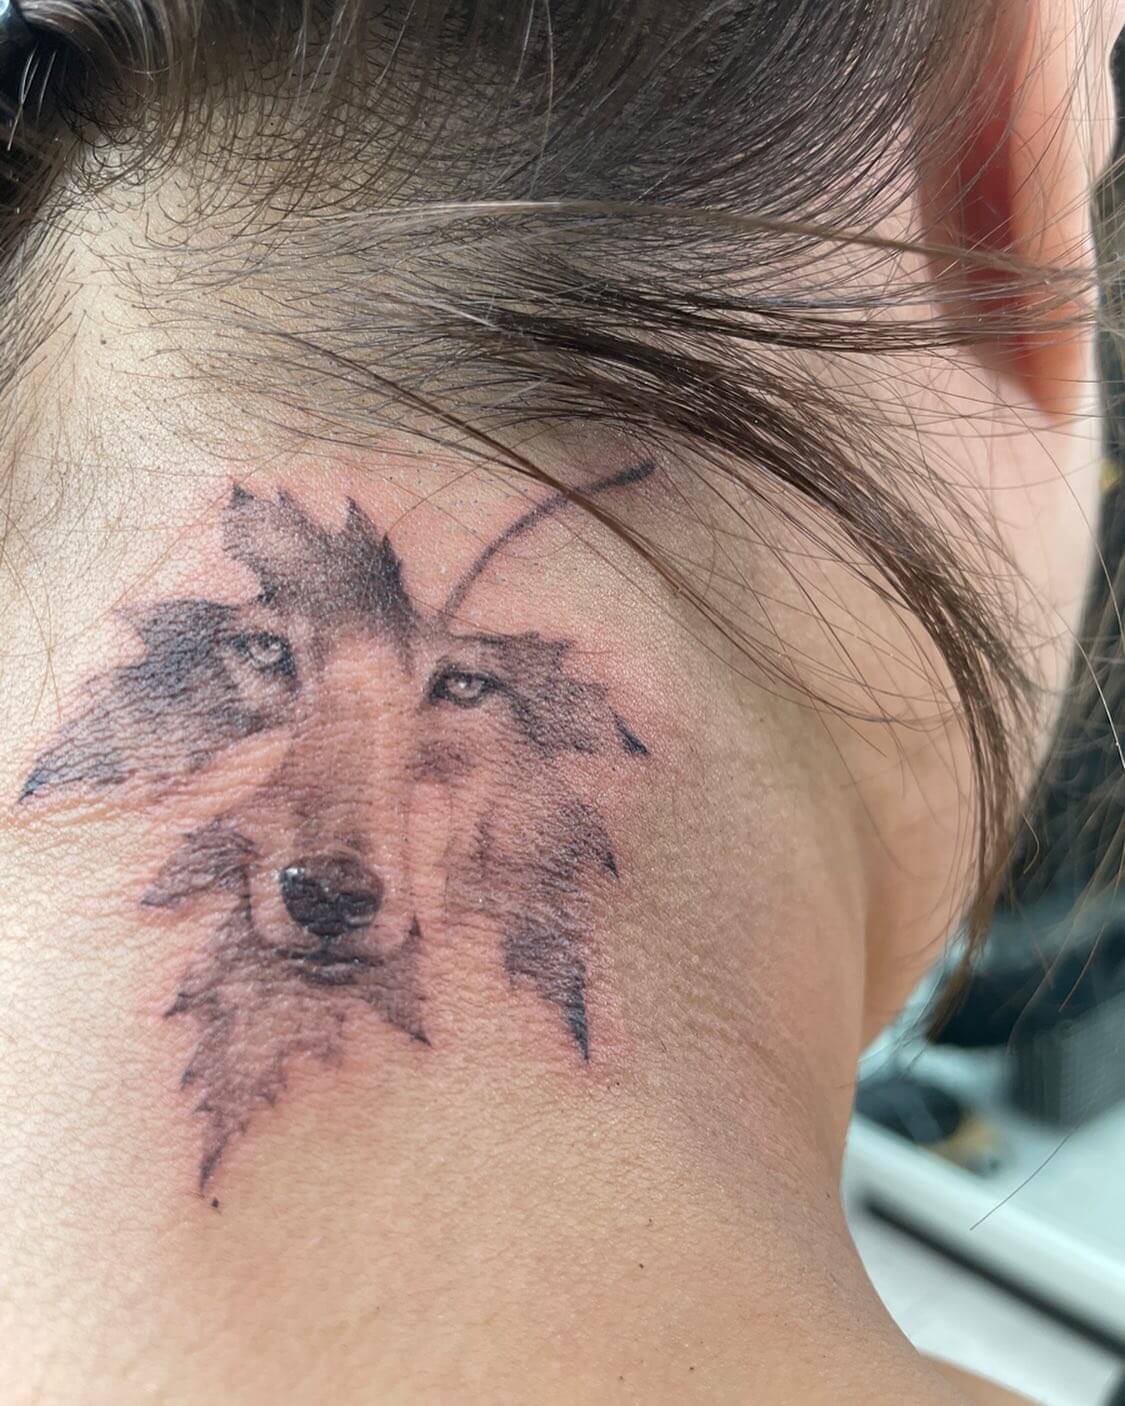 Wolf Neck Tattoo